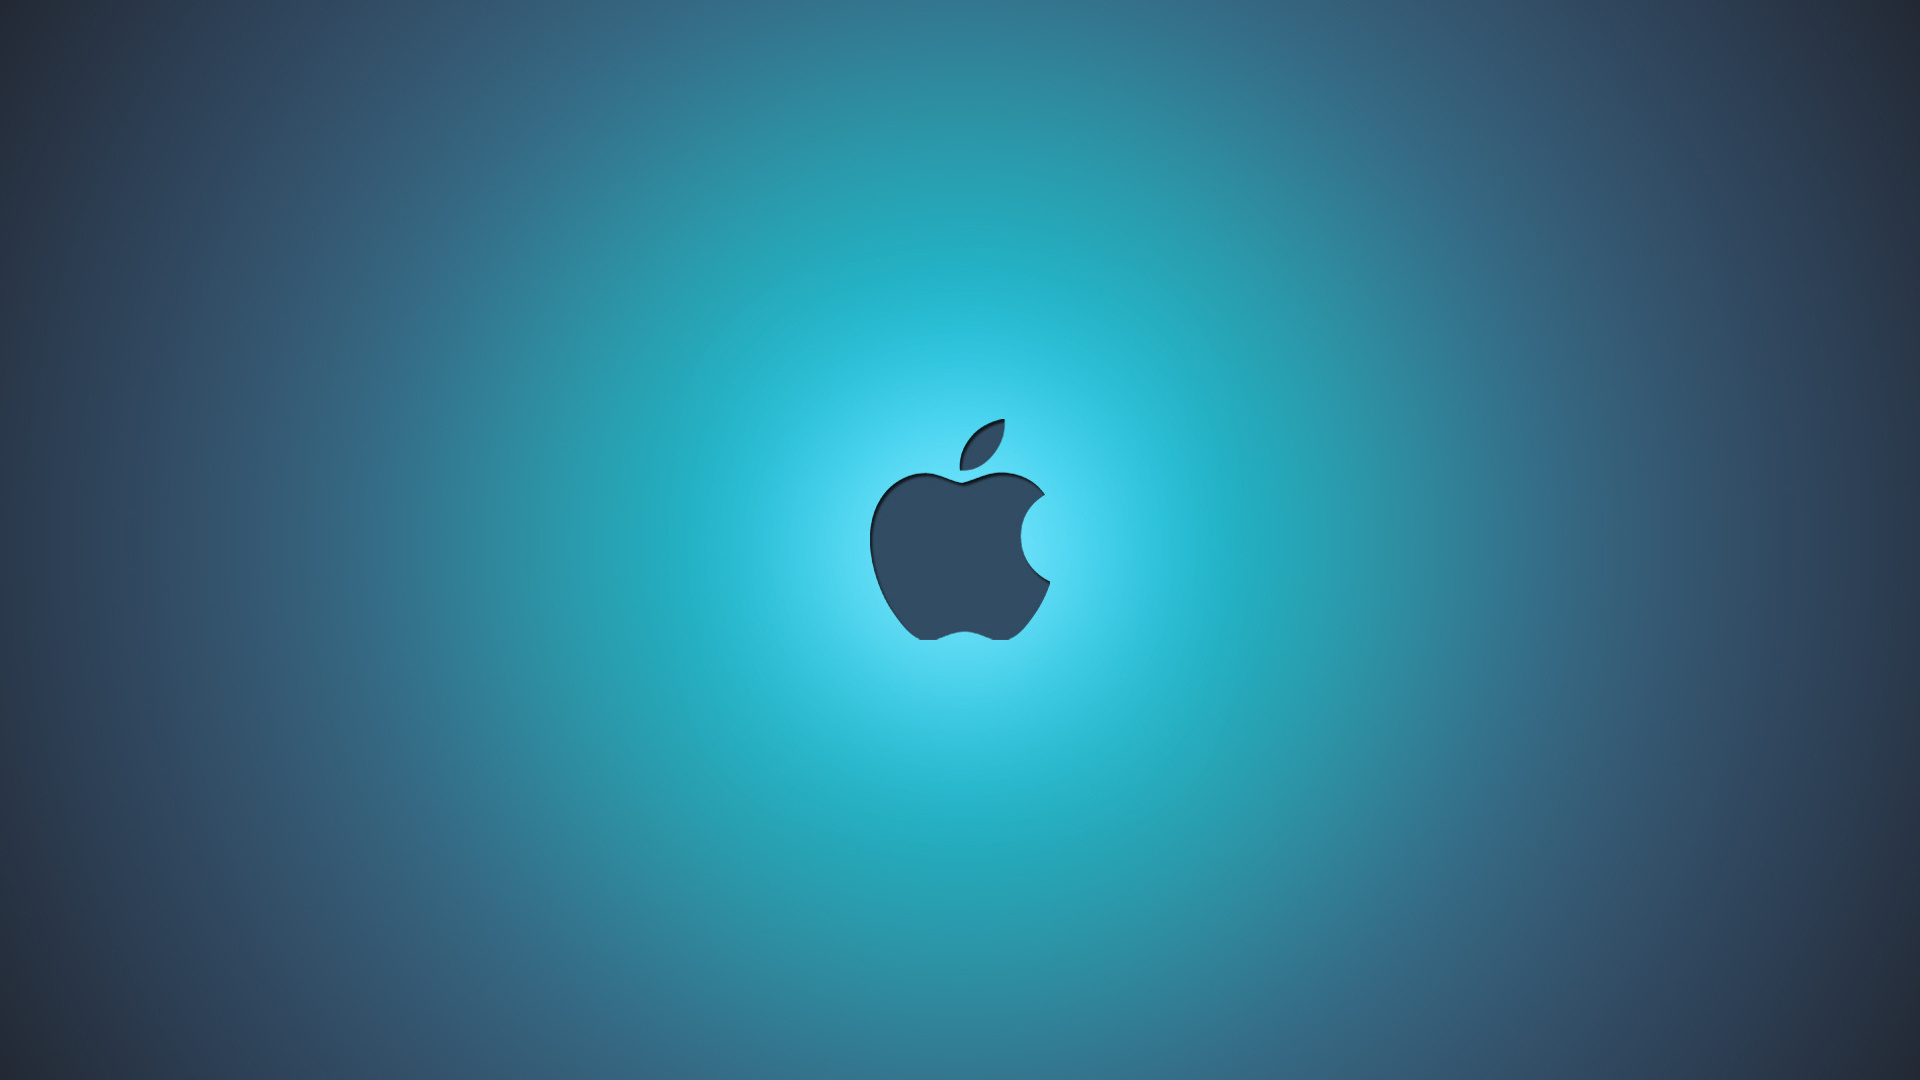 Apple Blue Background Wallpaper Desktop With